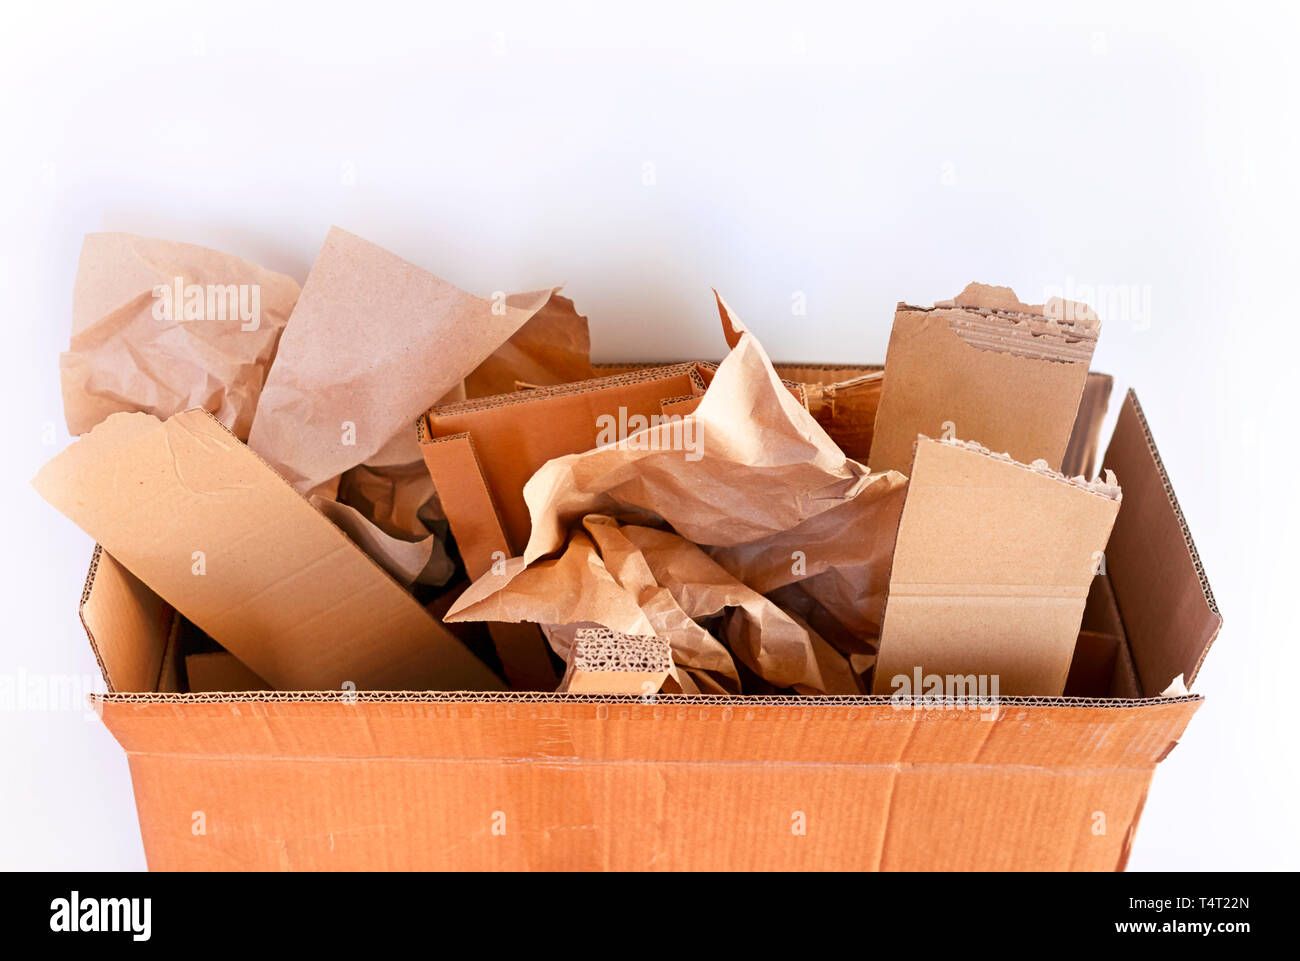 Use That Pile of Empty  Boxes to Do Something Wonderful